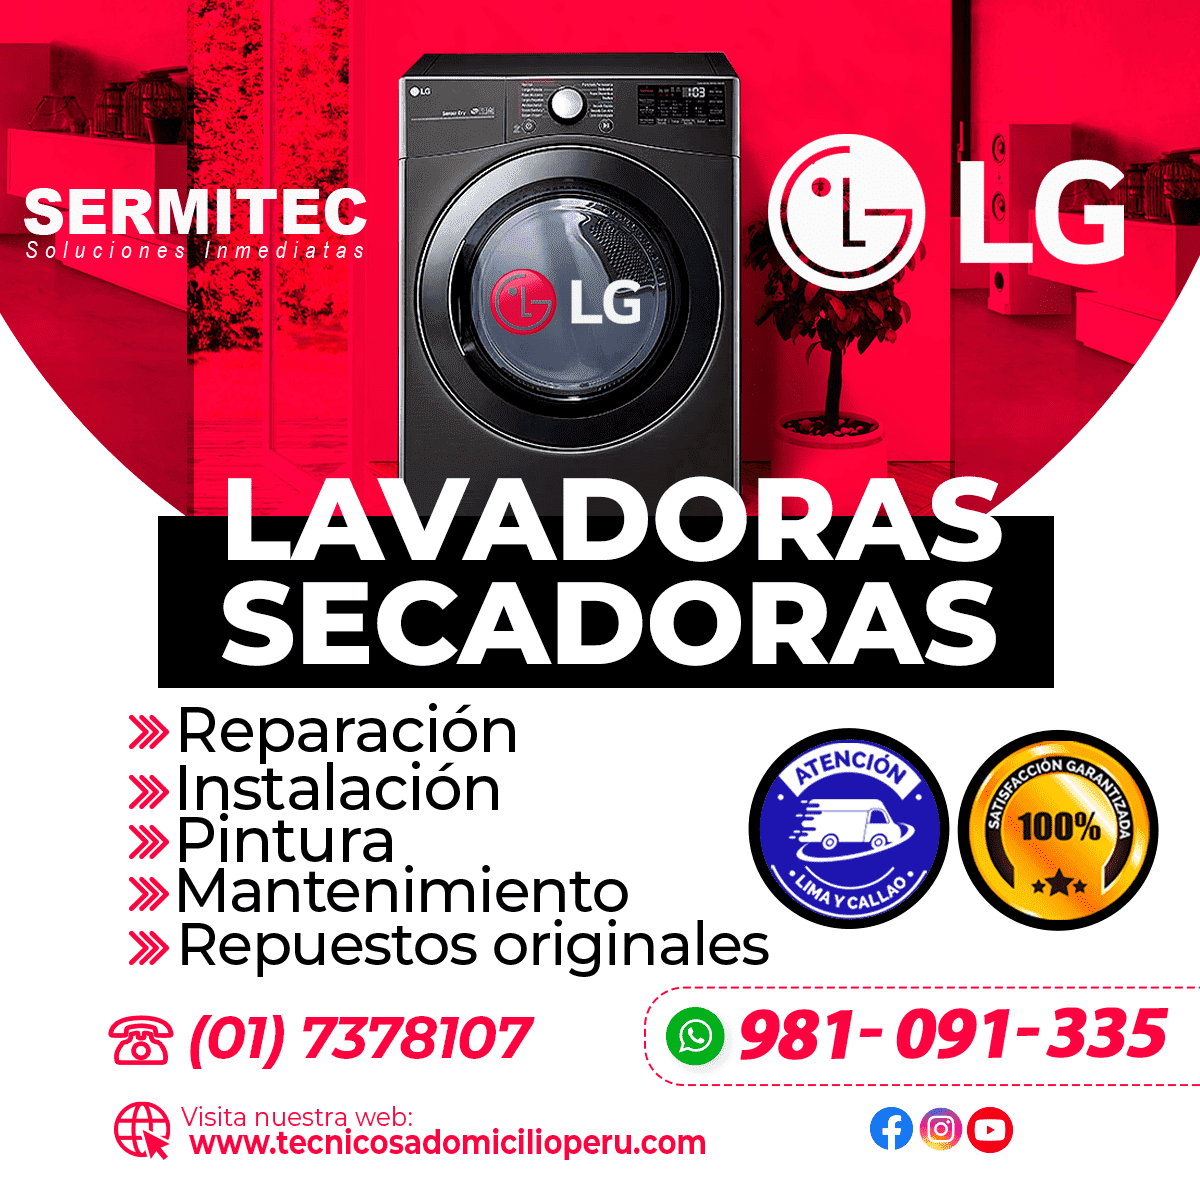 LG Reparacion de Lavadoras 981091335 LINCE